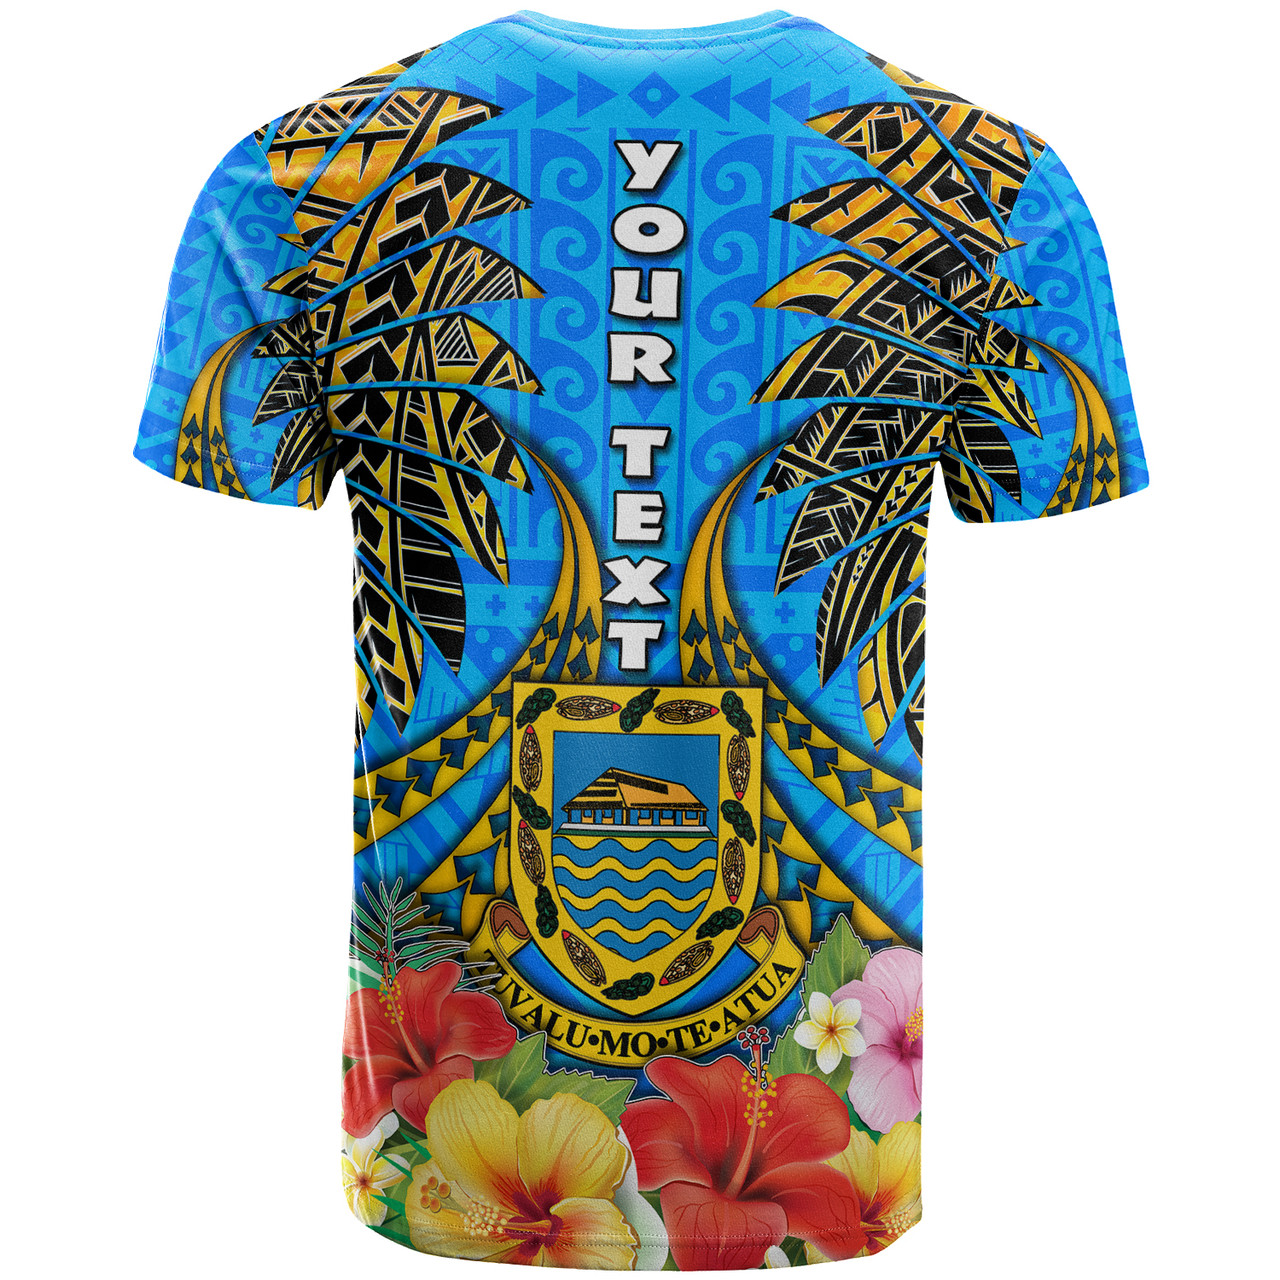 Tuvalu Polynesian T-Shirt - Custom Tuvalu Independence Day with Polynesian Hibiscus T-Shirt